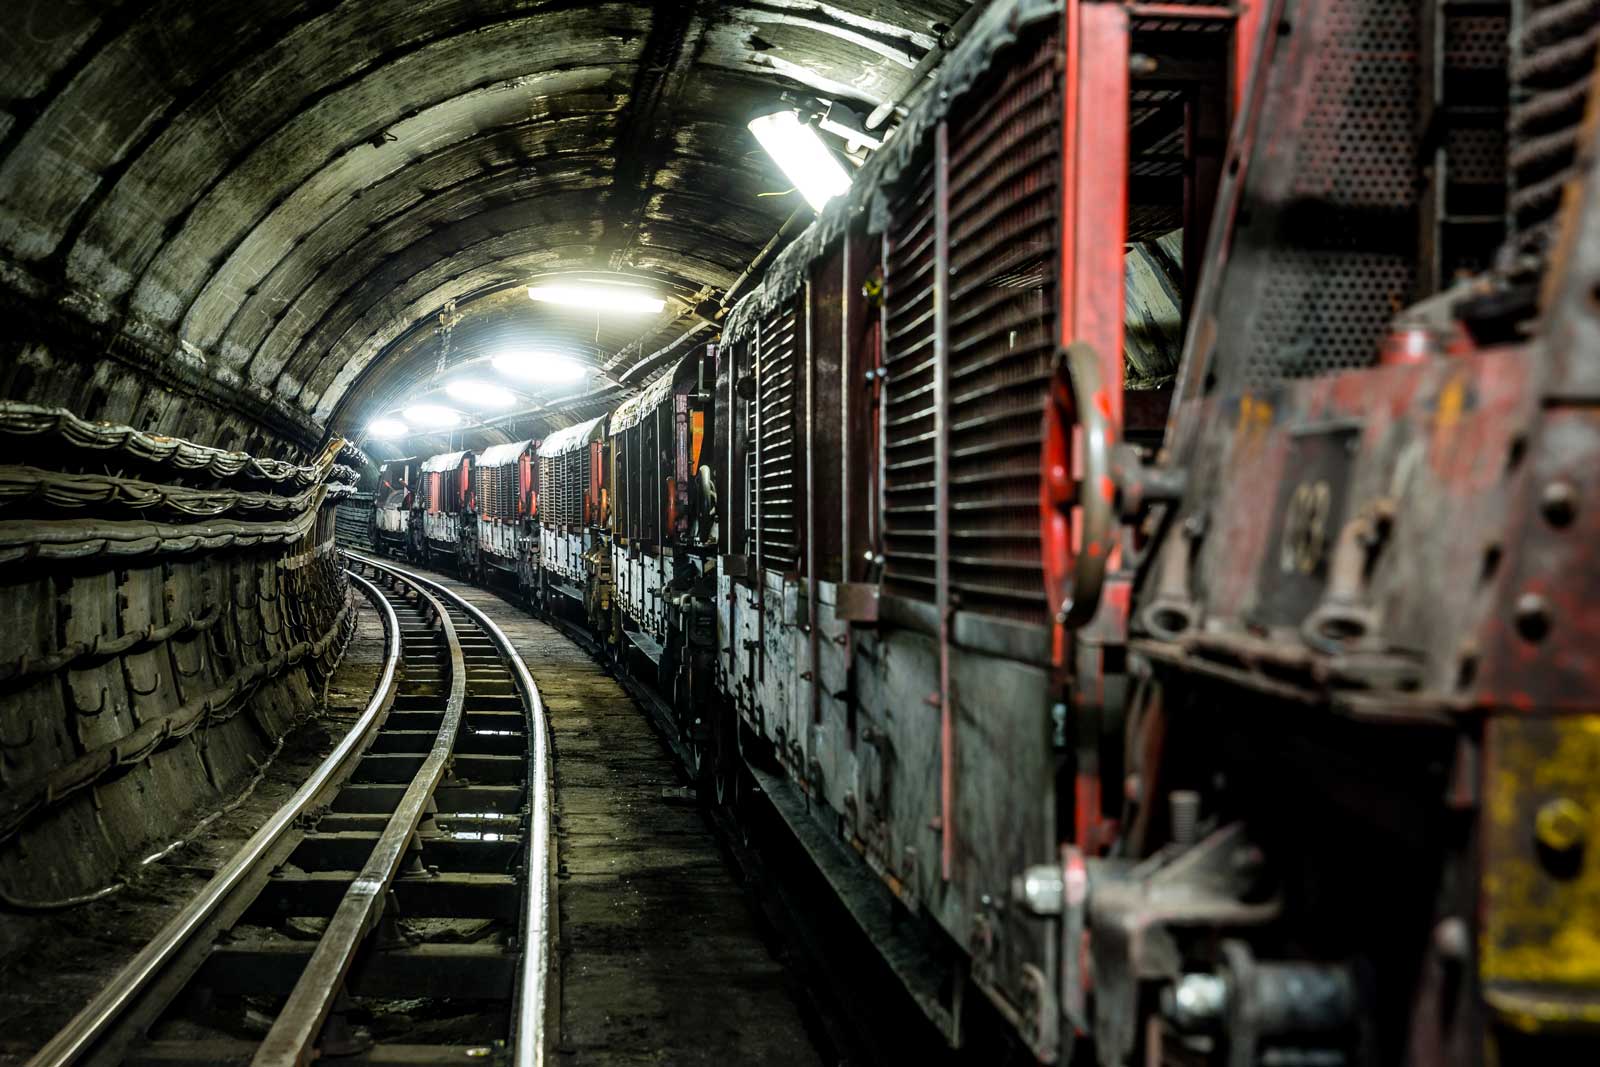 Detail of 1980s Greenbat Train in Tunnel